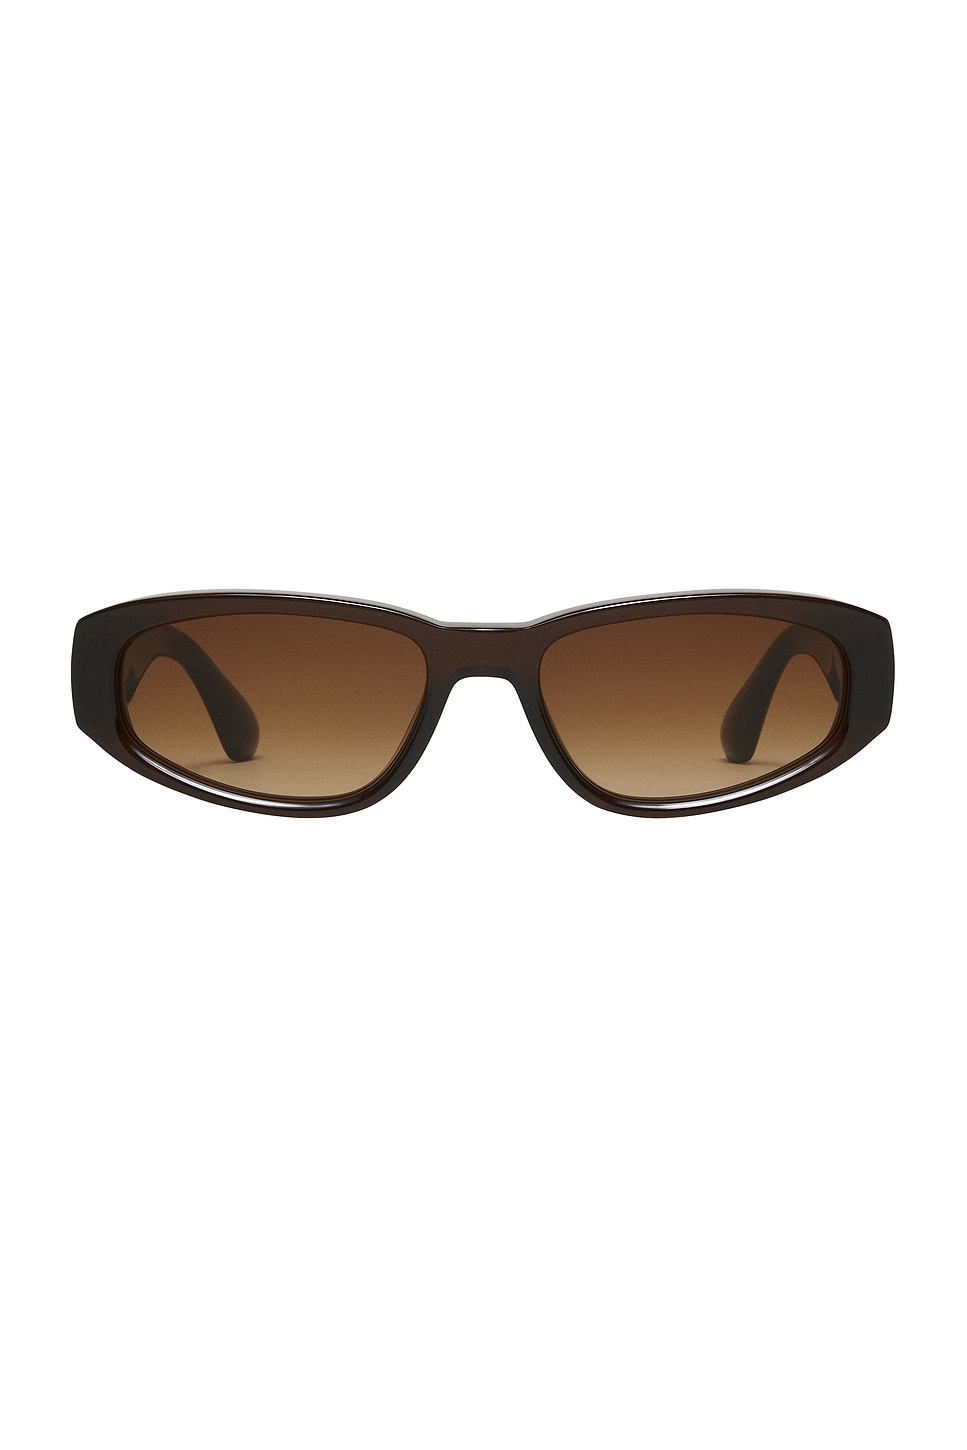 09 Sunglasses in Brown